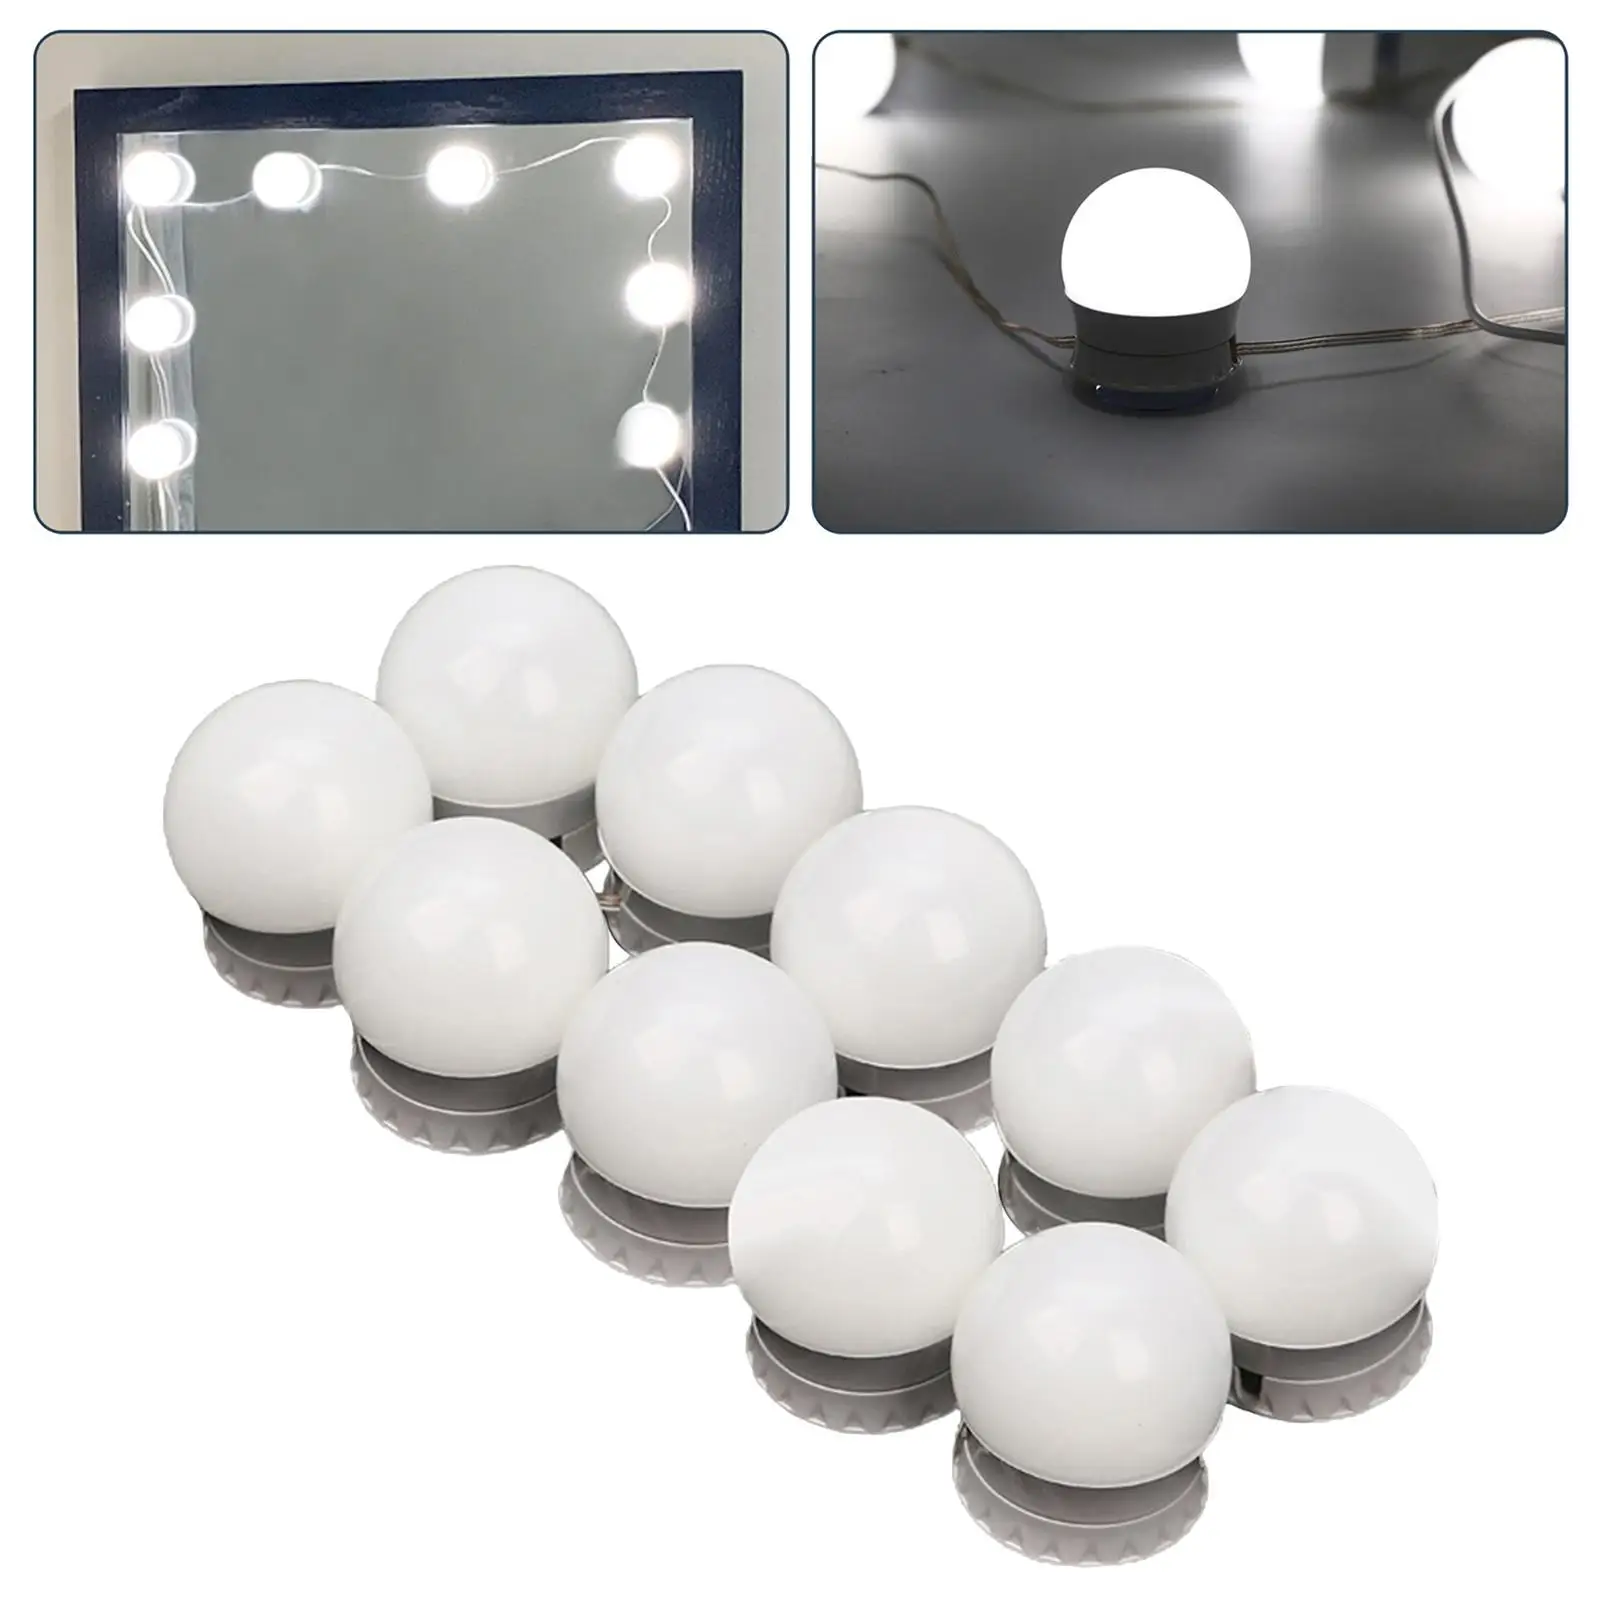 LED Make Up Light 10 Bulb Mirror Lights Wall Lamp for Makeup Dressing Table